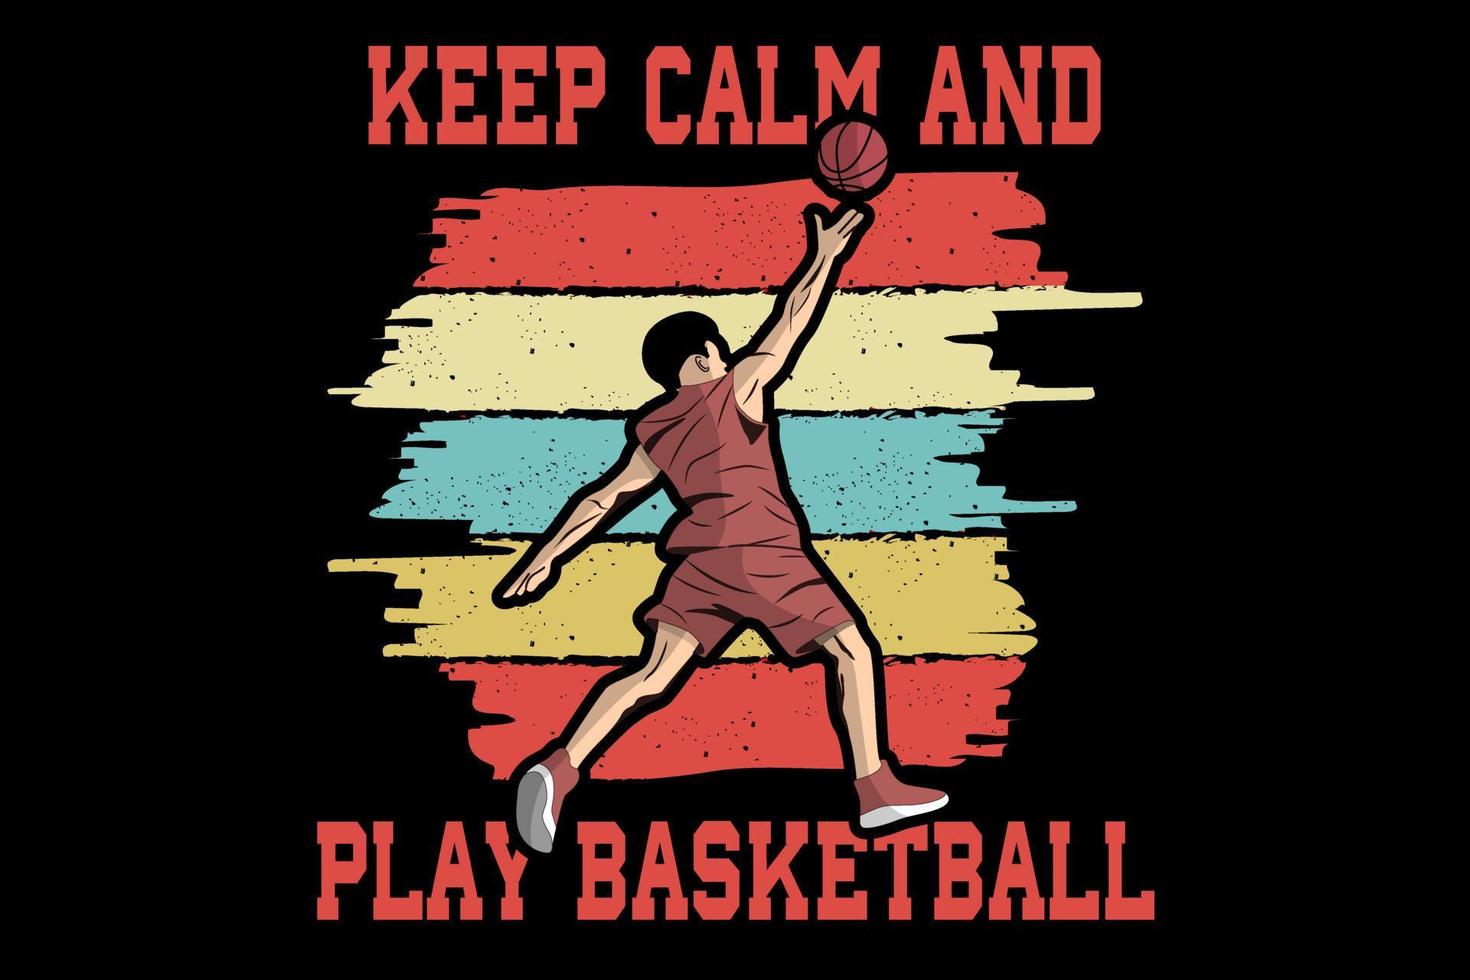 Keep calm and play basketball design vintage retro vector